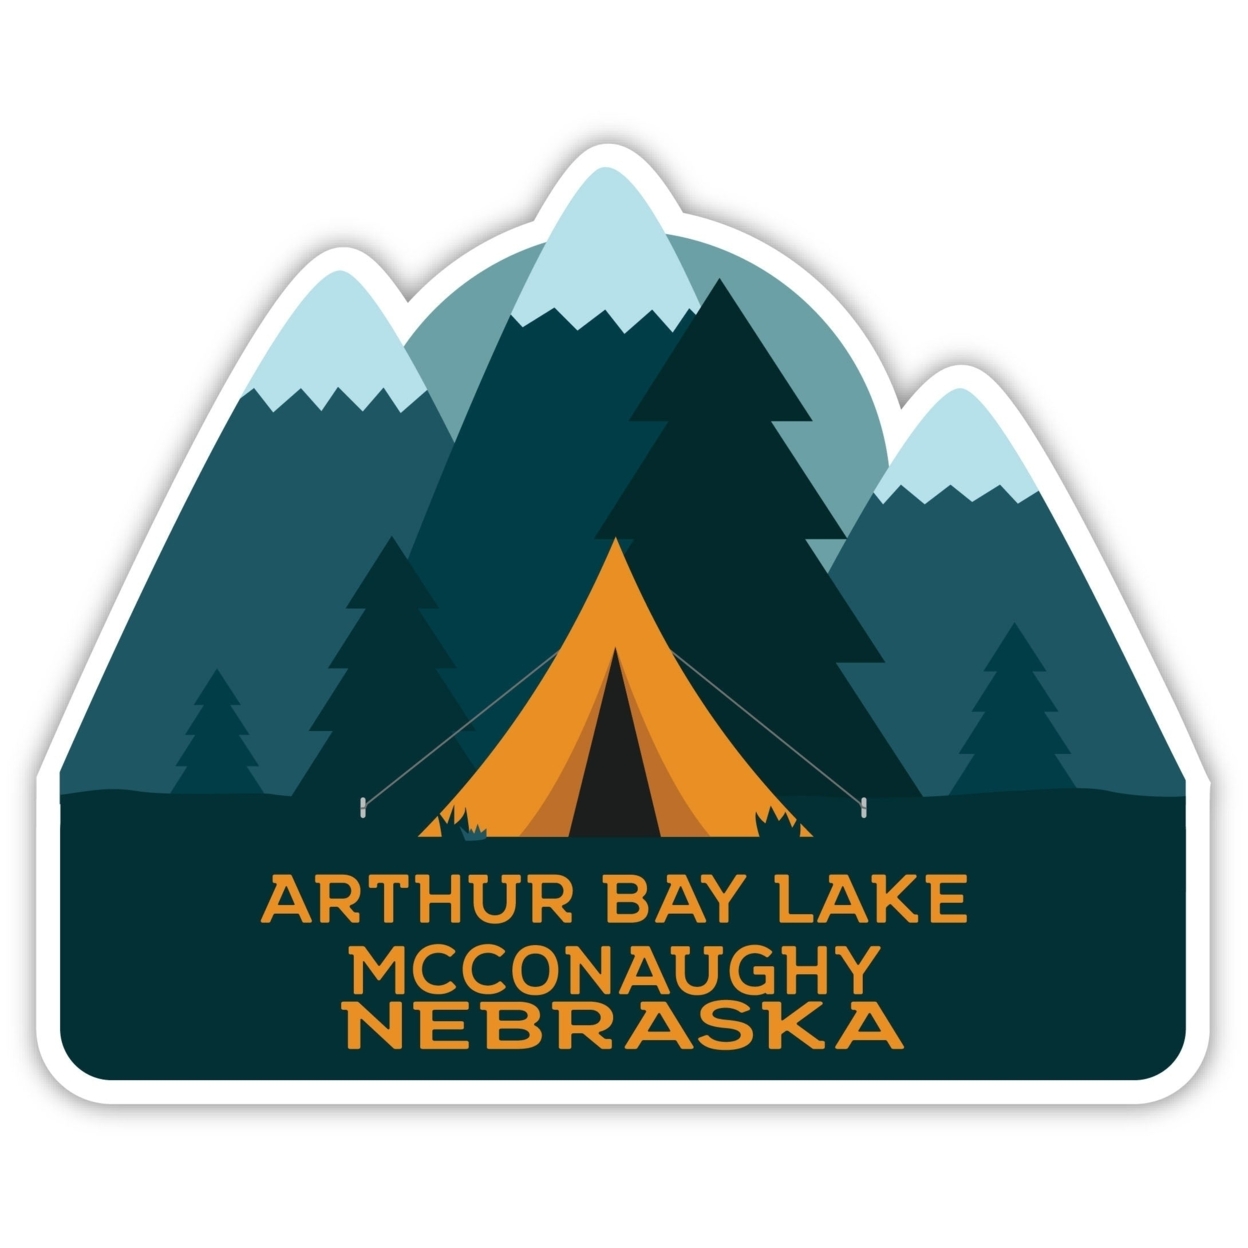 Arthur Bay Lake Mcconaughy Nebraska Souvenir Decorative Stickers (Choose Theme And Size) - 4-Pack, 8-Inch, Tent